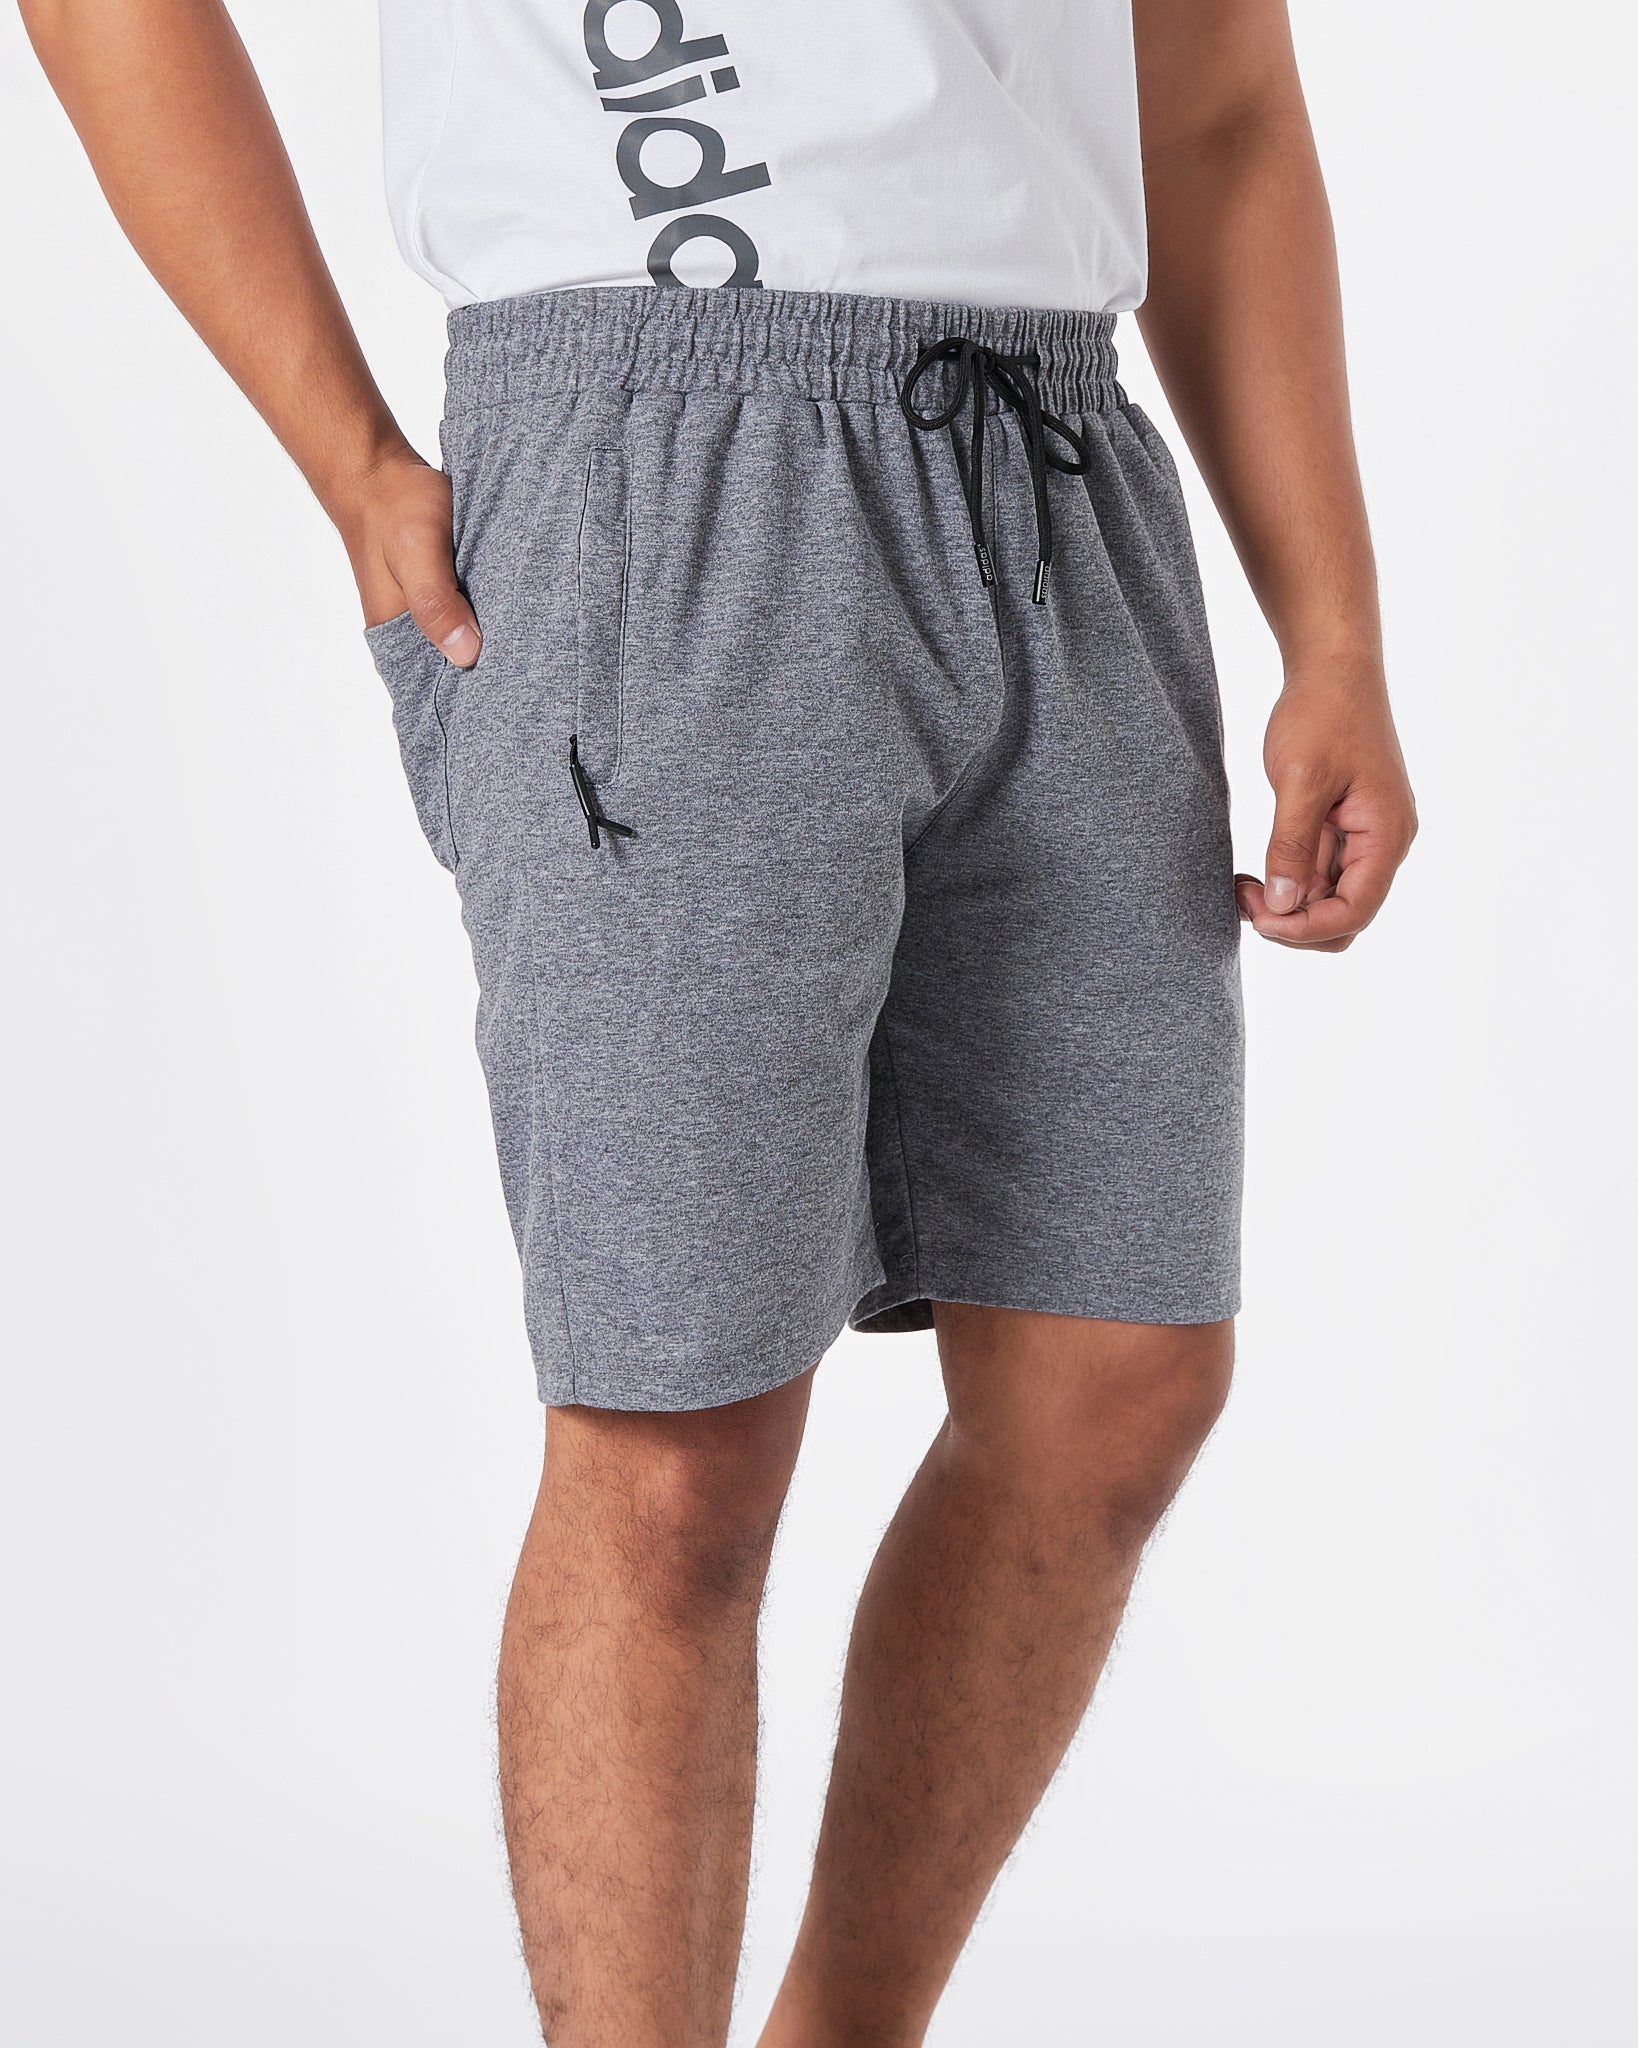 ADI Logo Vertical Printed Men Grey Track Shorts 13.90